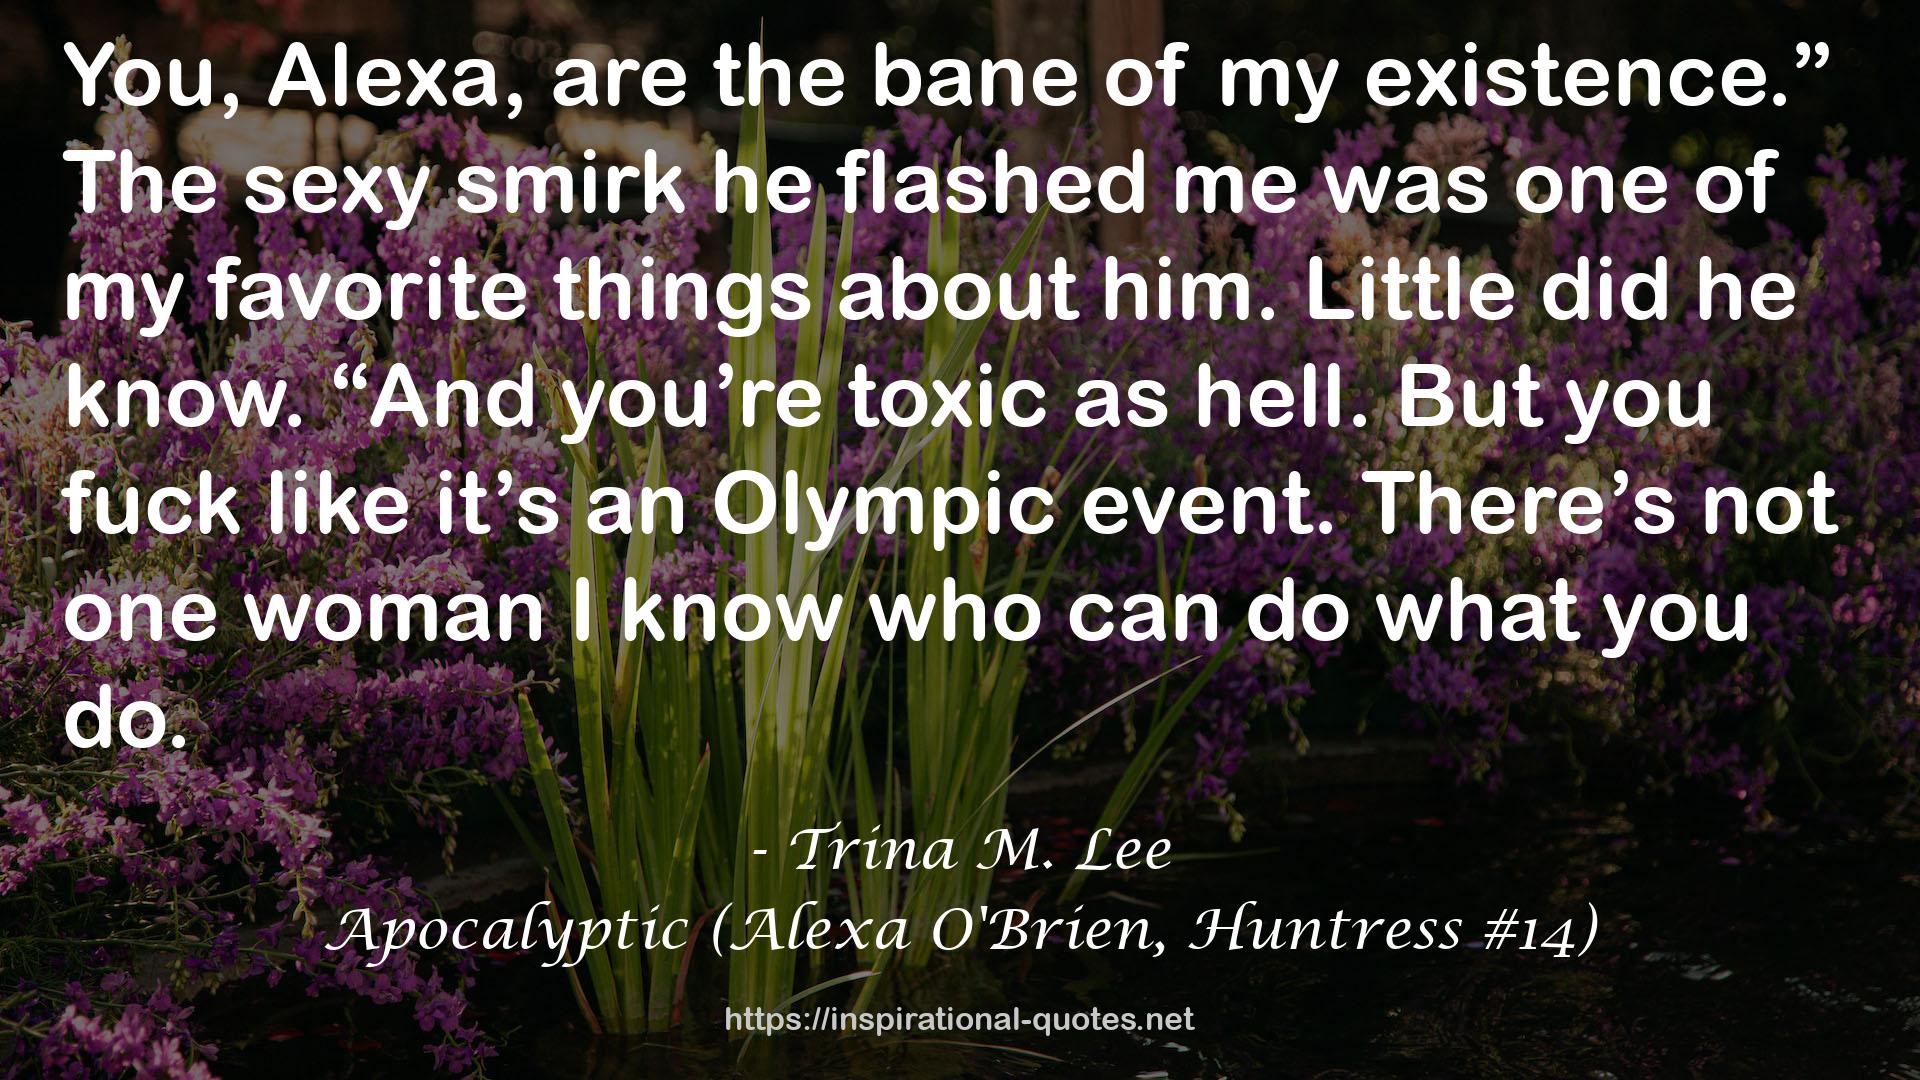 Apocalyptic (Alexa O'Brien, Huntress #14) QUOTES